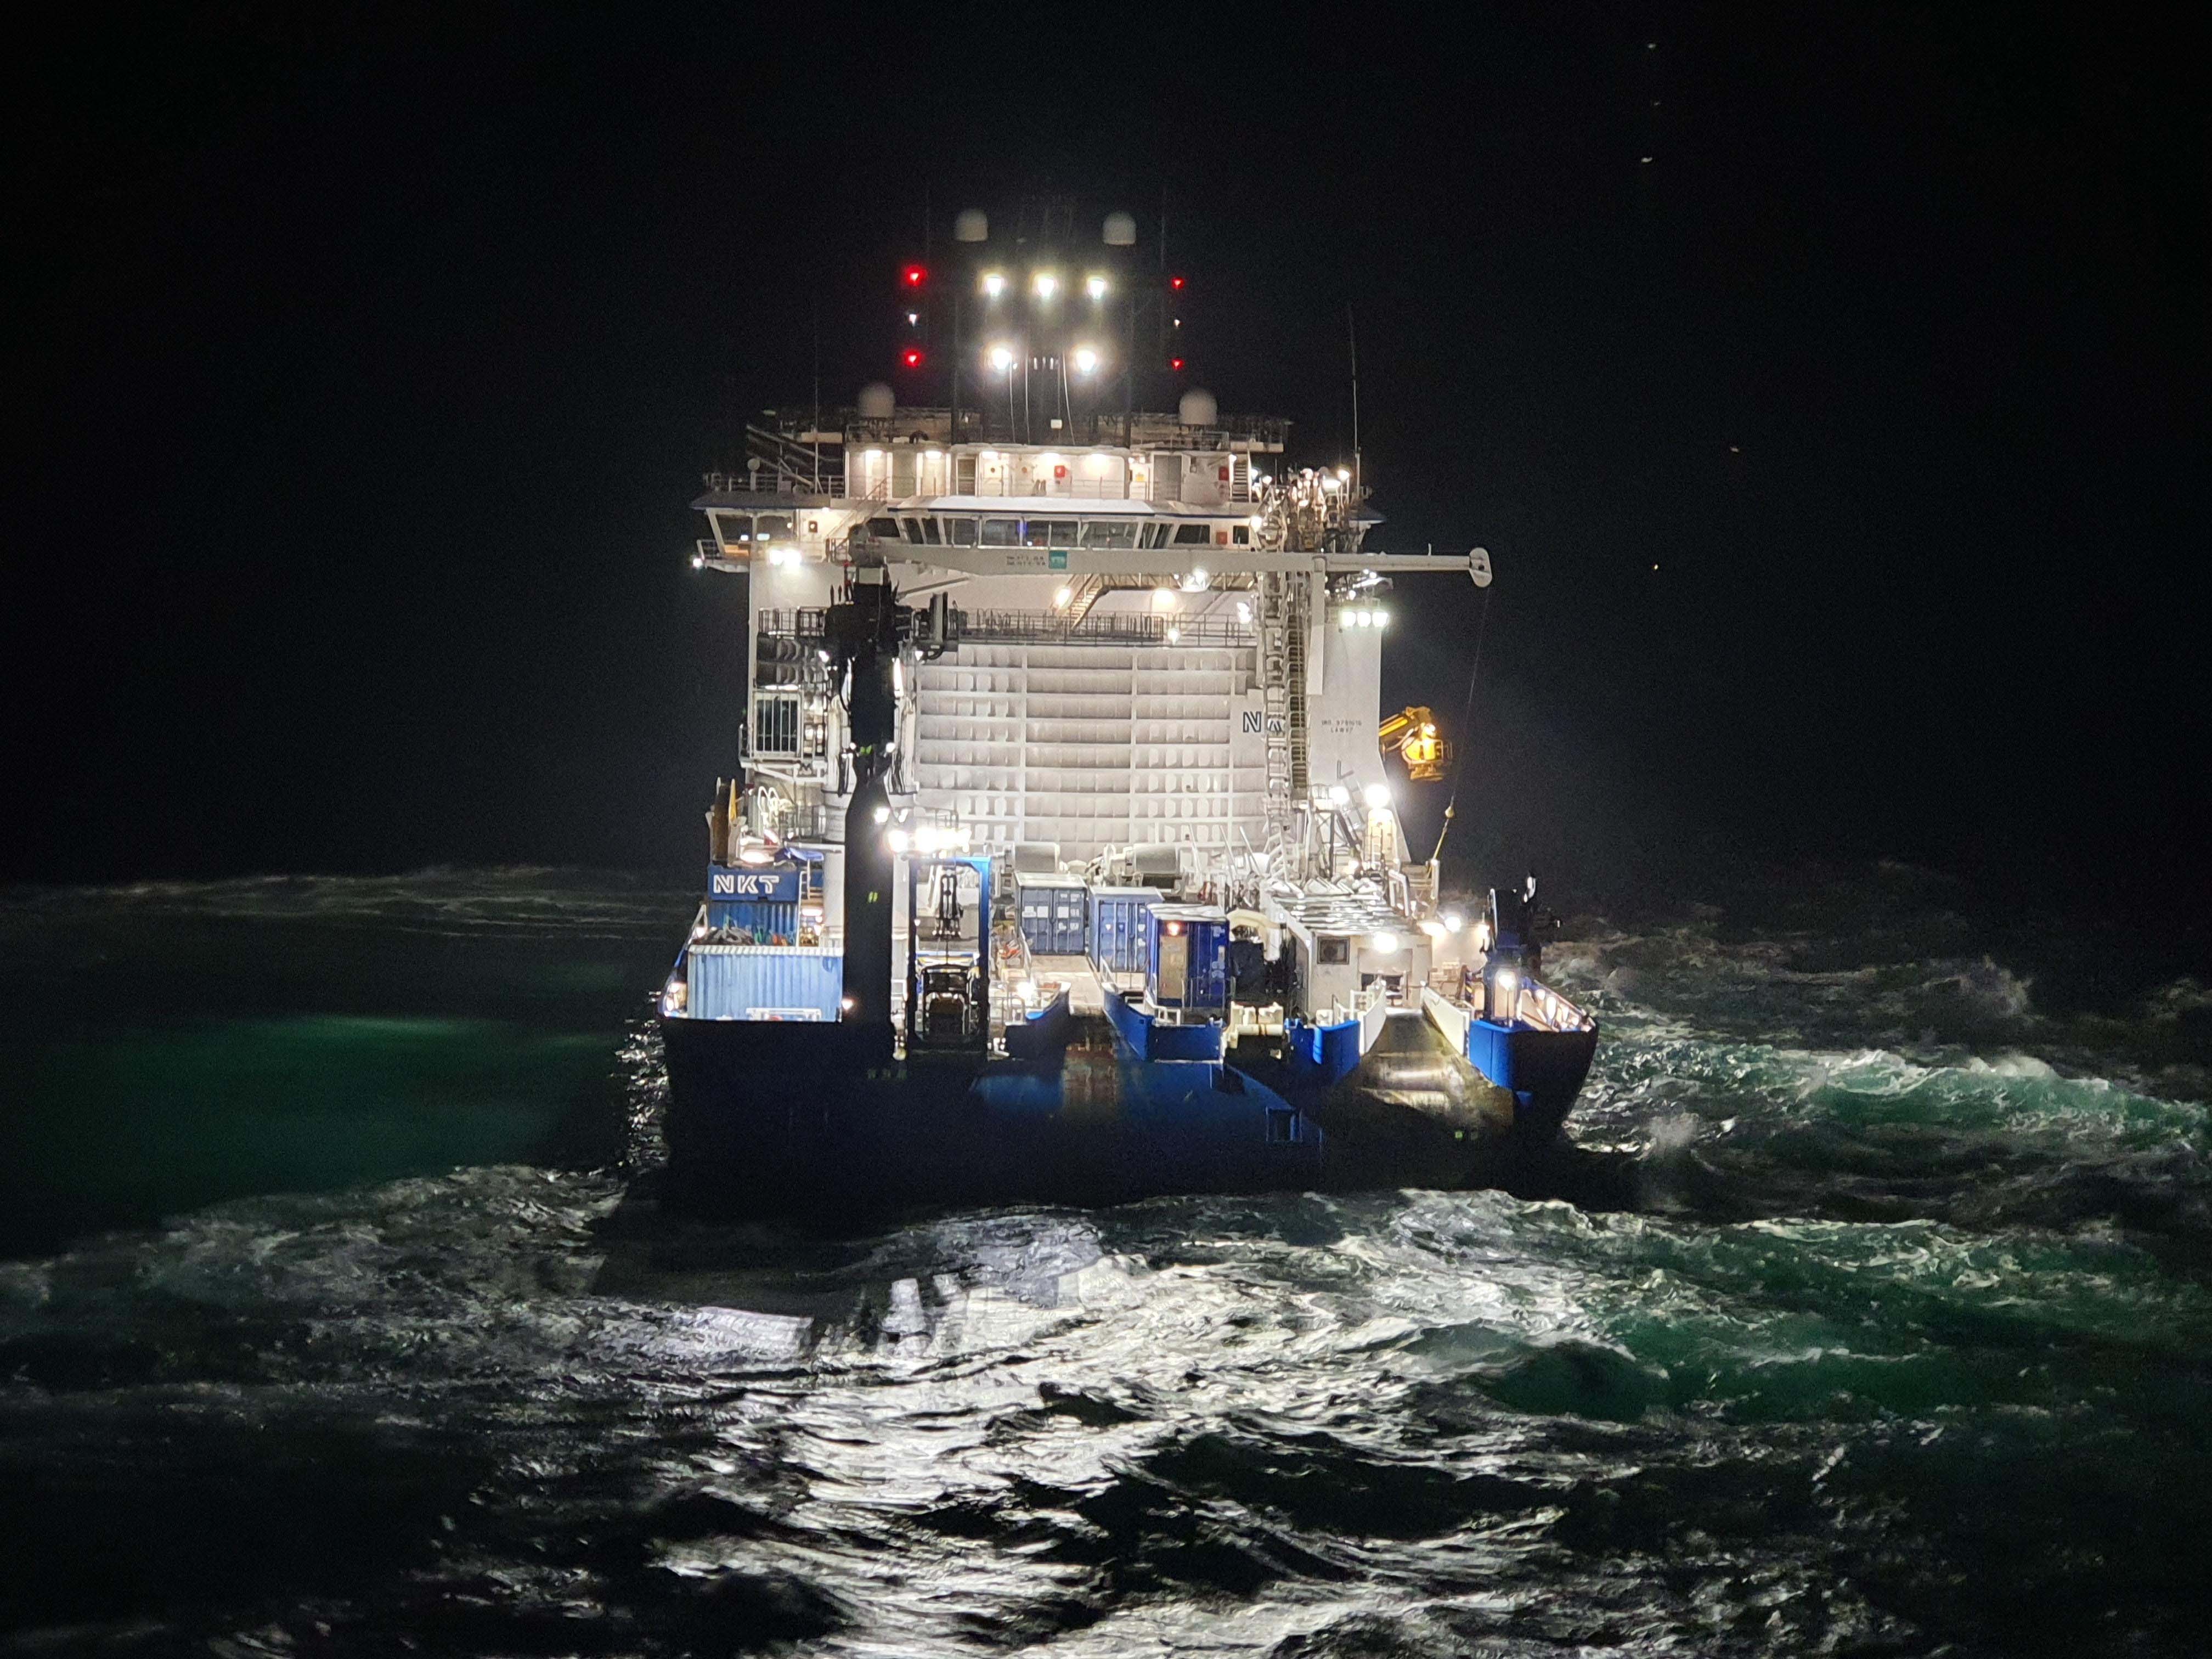 NKT vessel on BritNed repair duty